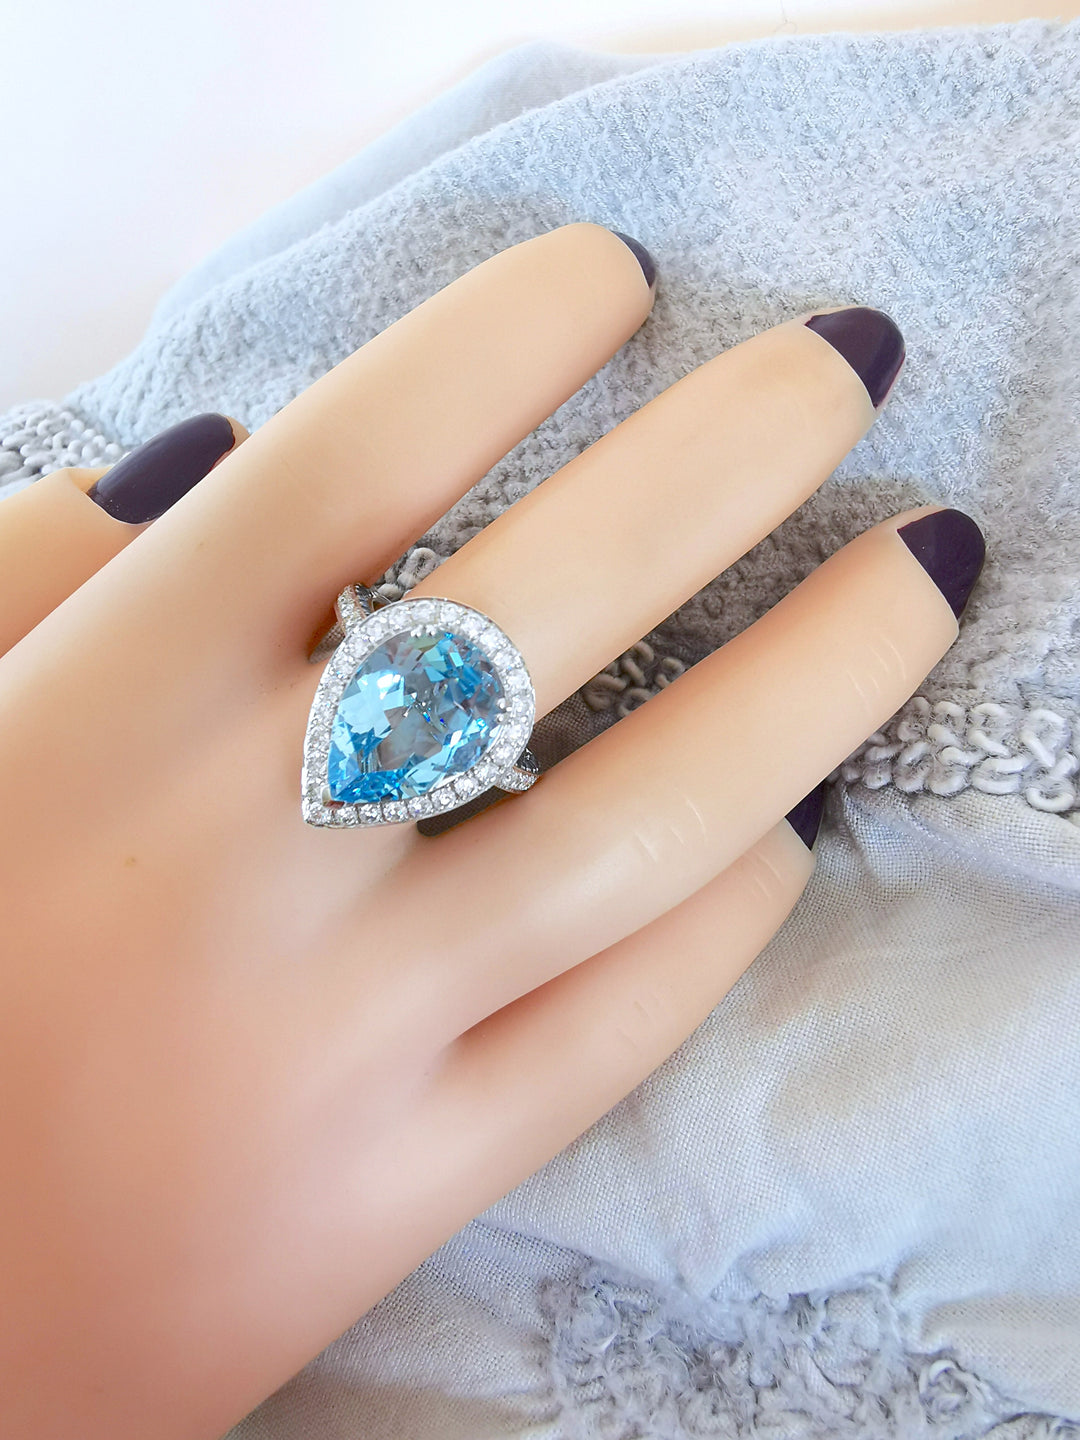 Bague Topaze bleue / Diamants / Saphirs / Or Gris 18 K / (750°/°°) / 18 carats